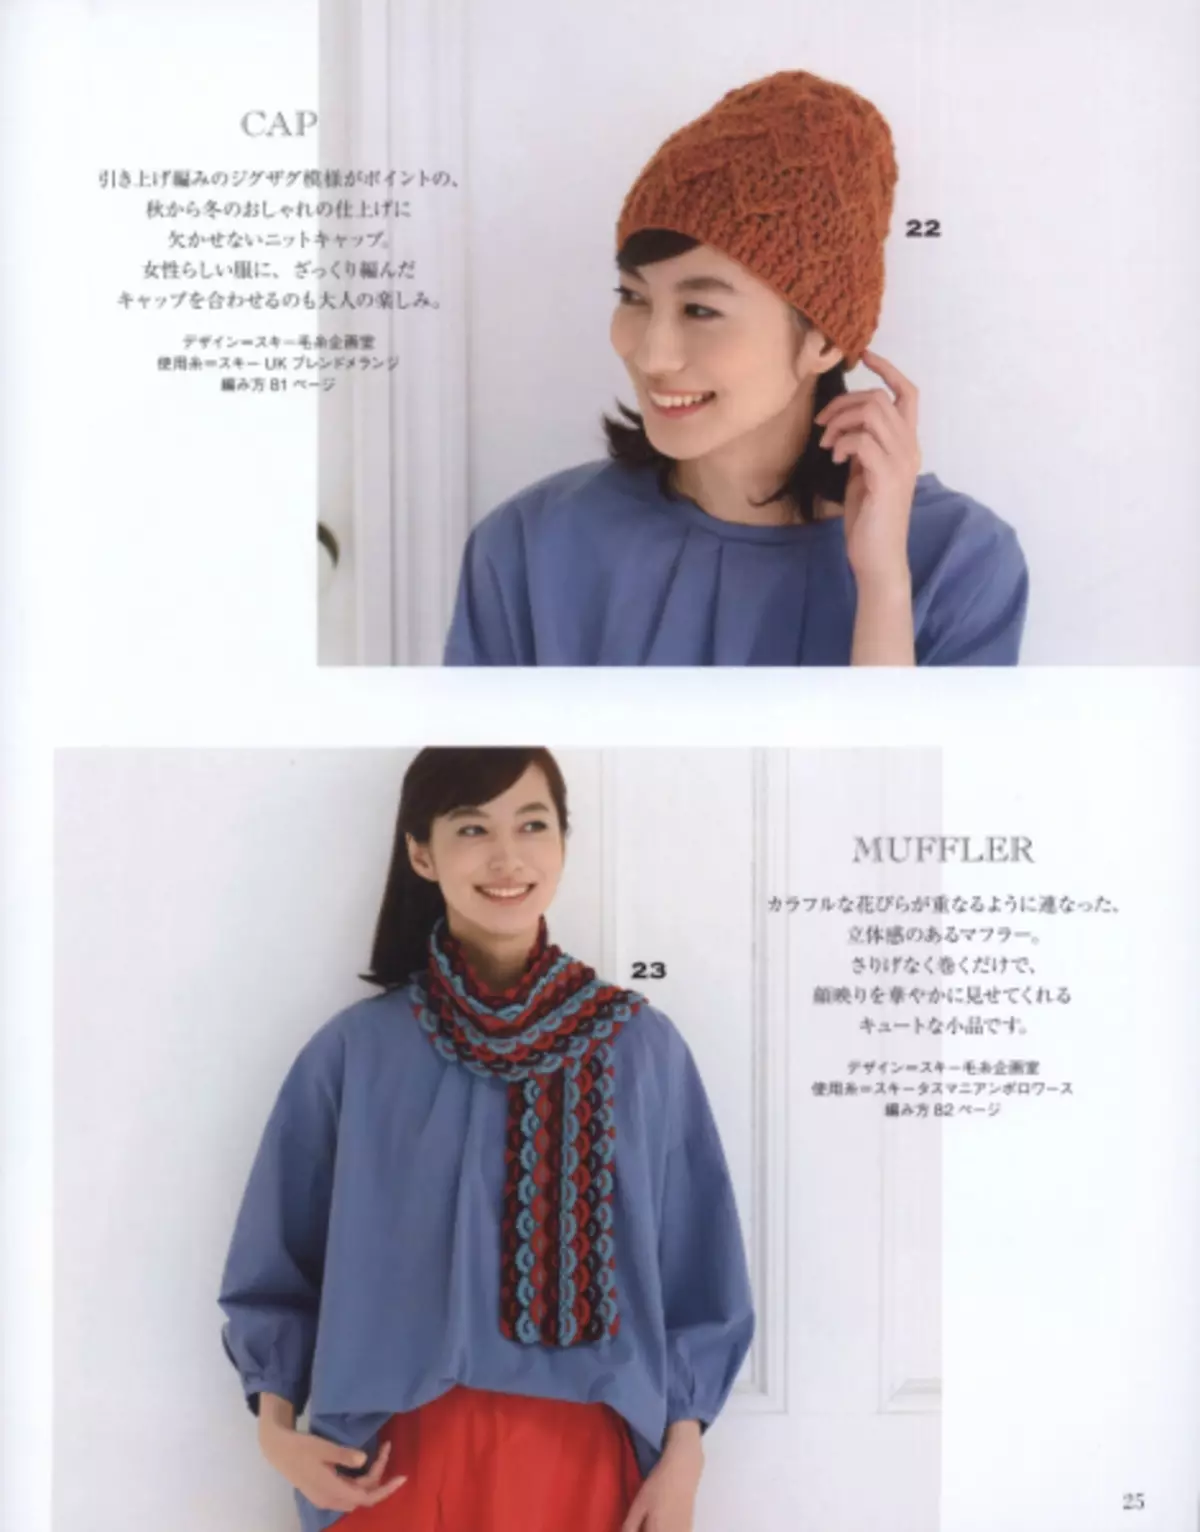 Japans magazine 